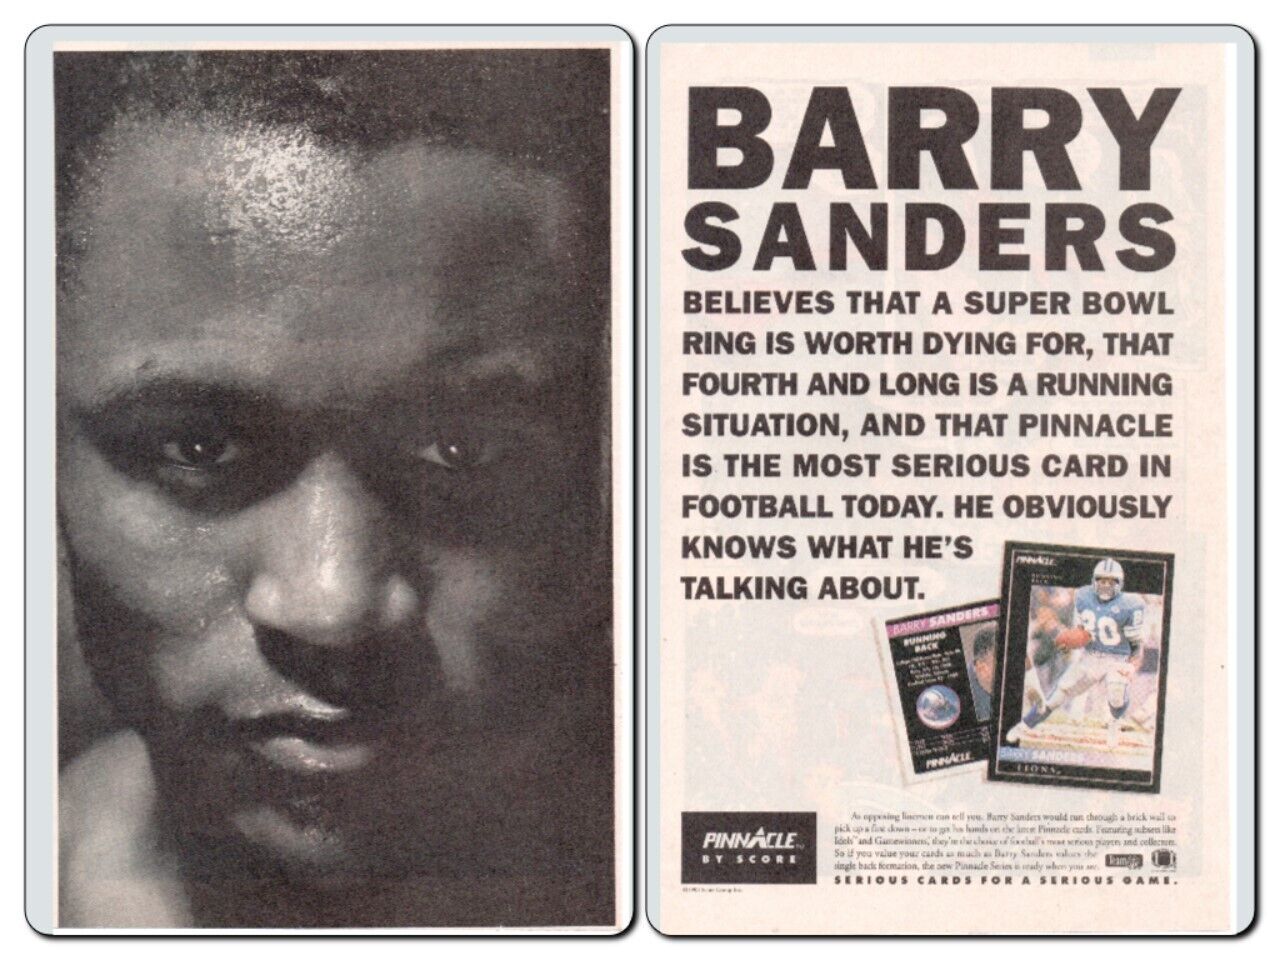 1992 BARRY SANDERS #20 NFL Detroit Lions 2PG PRINT AD ART - SCORE PINNACLE CARDS